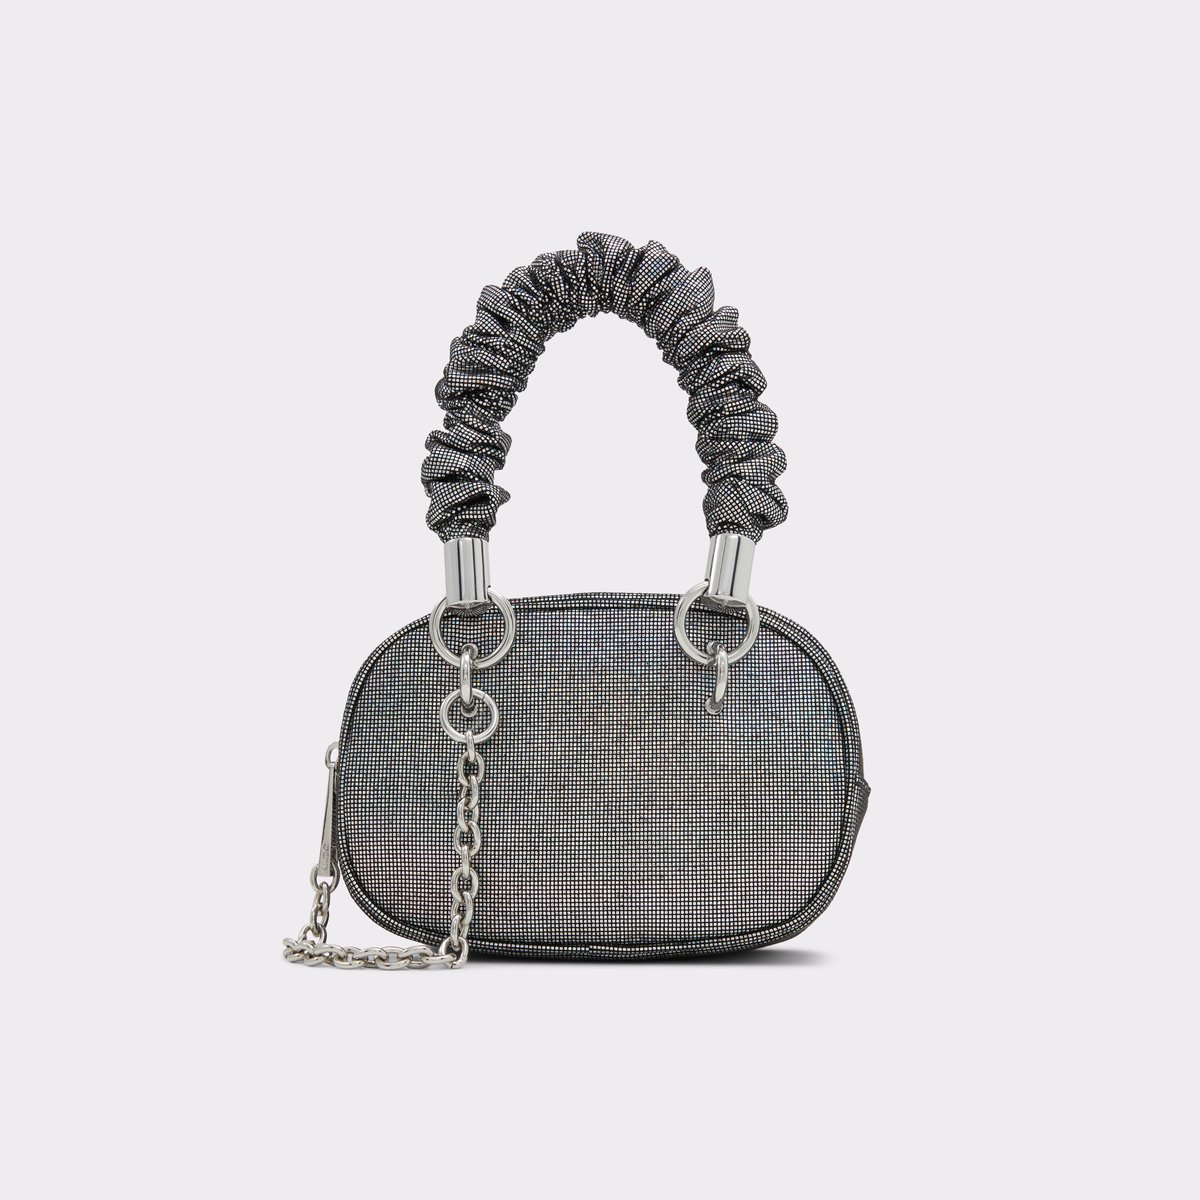 Aldo Silver Clutch Handbag w inside zipper & Top closure 12 by 5 w  chain